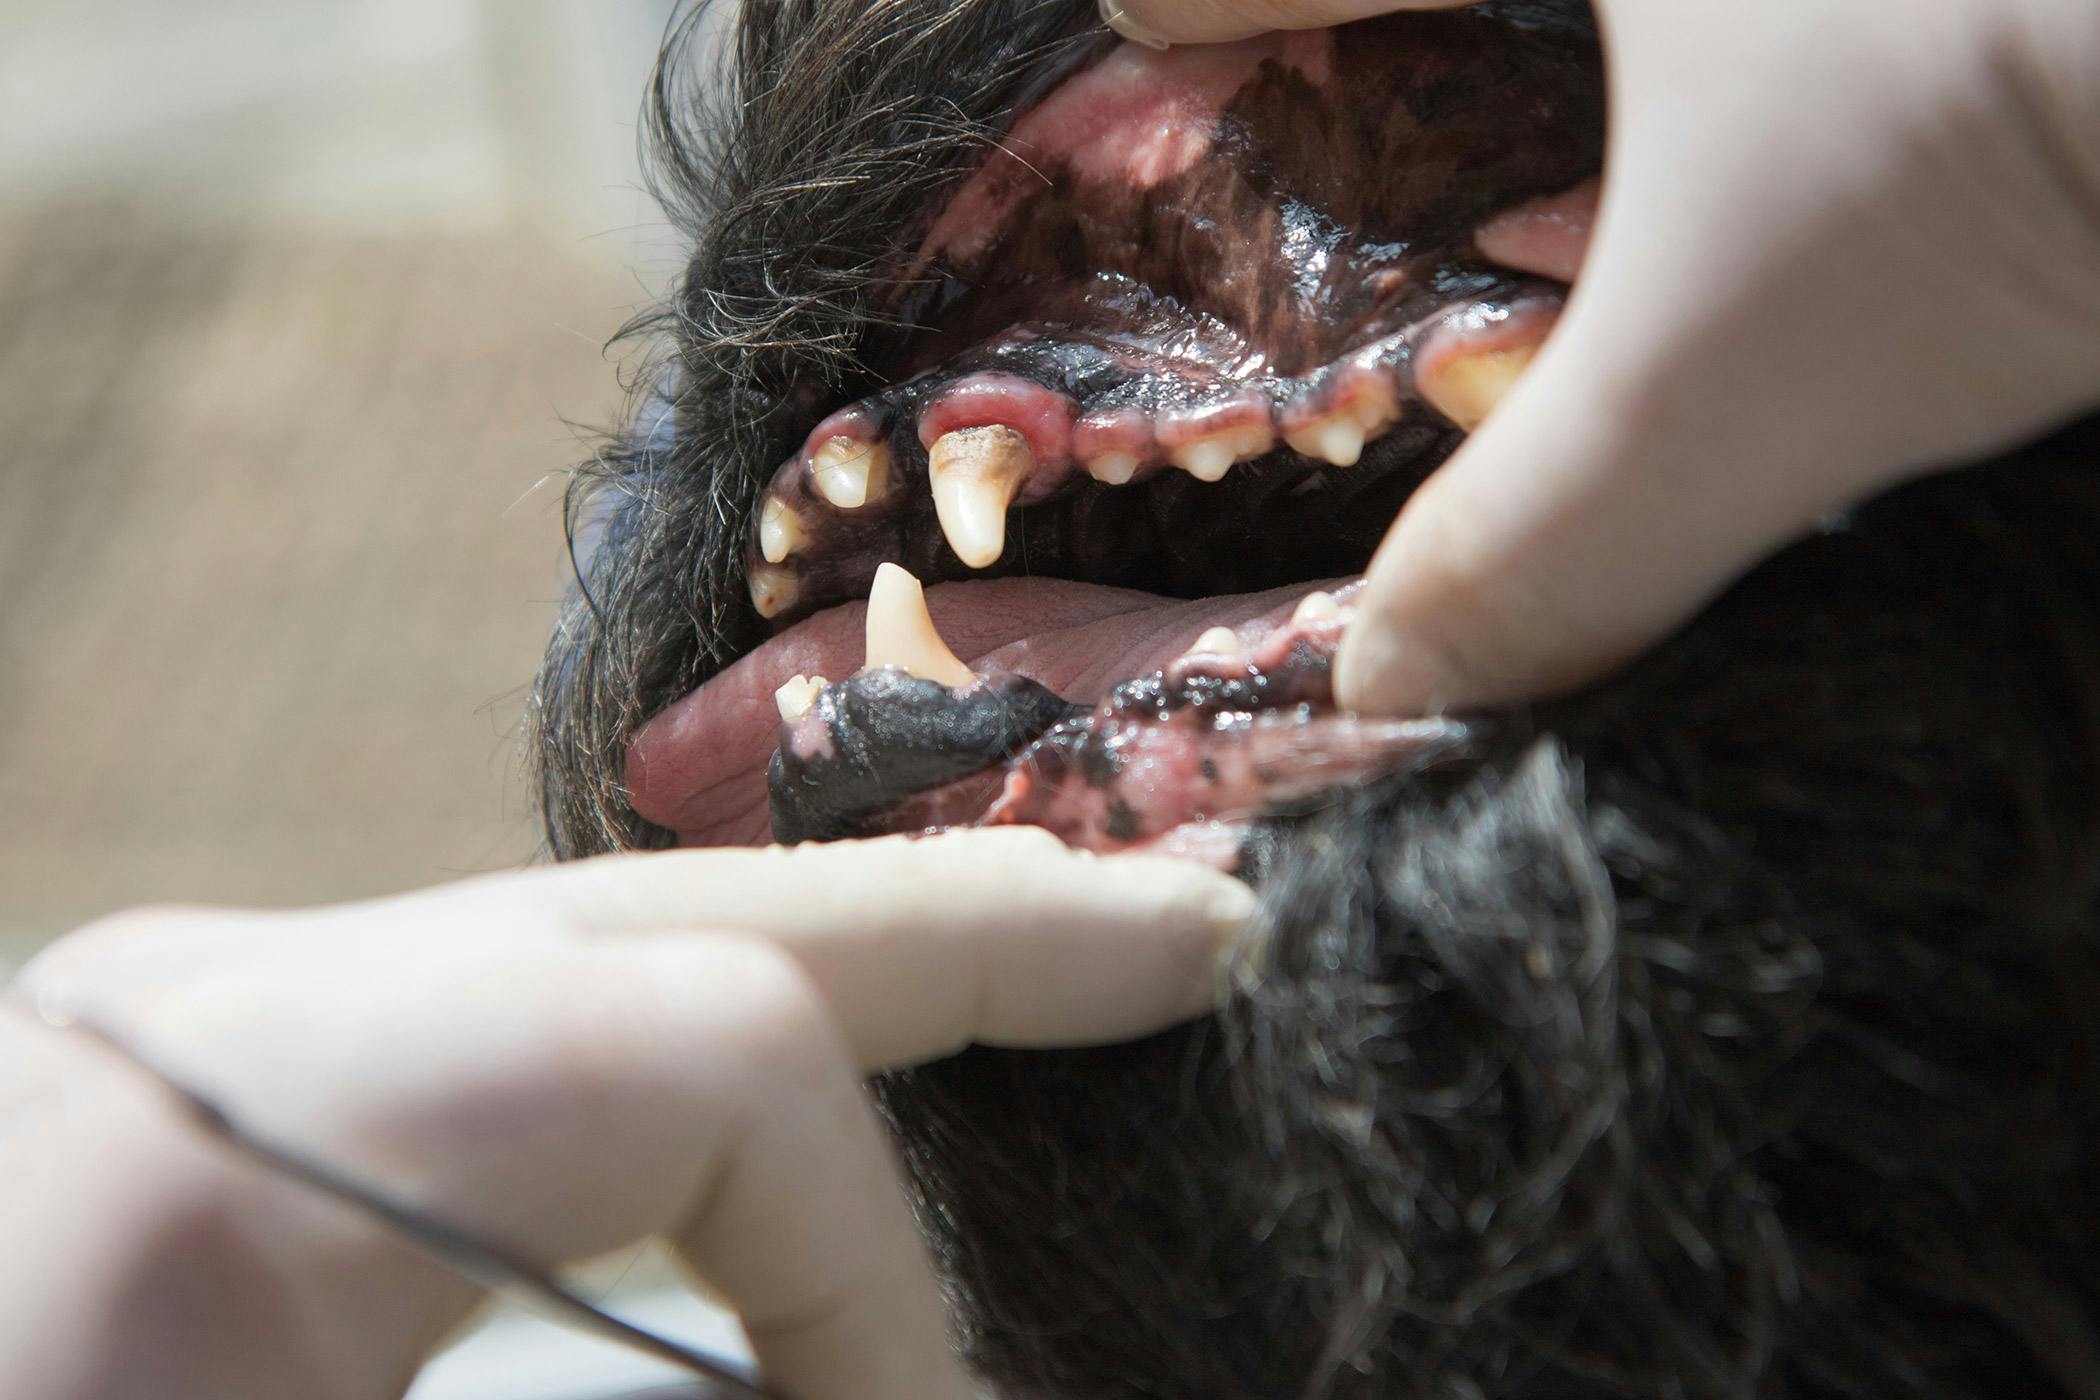 Black on dog tooth